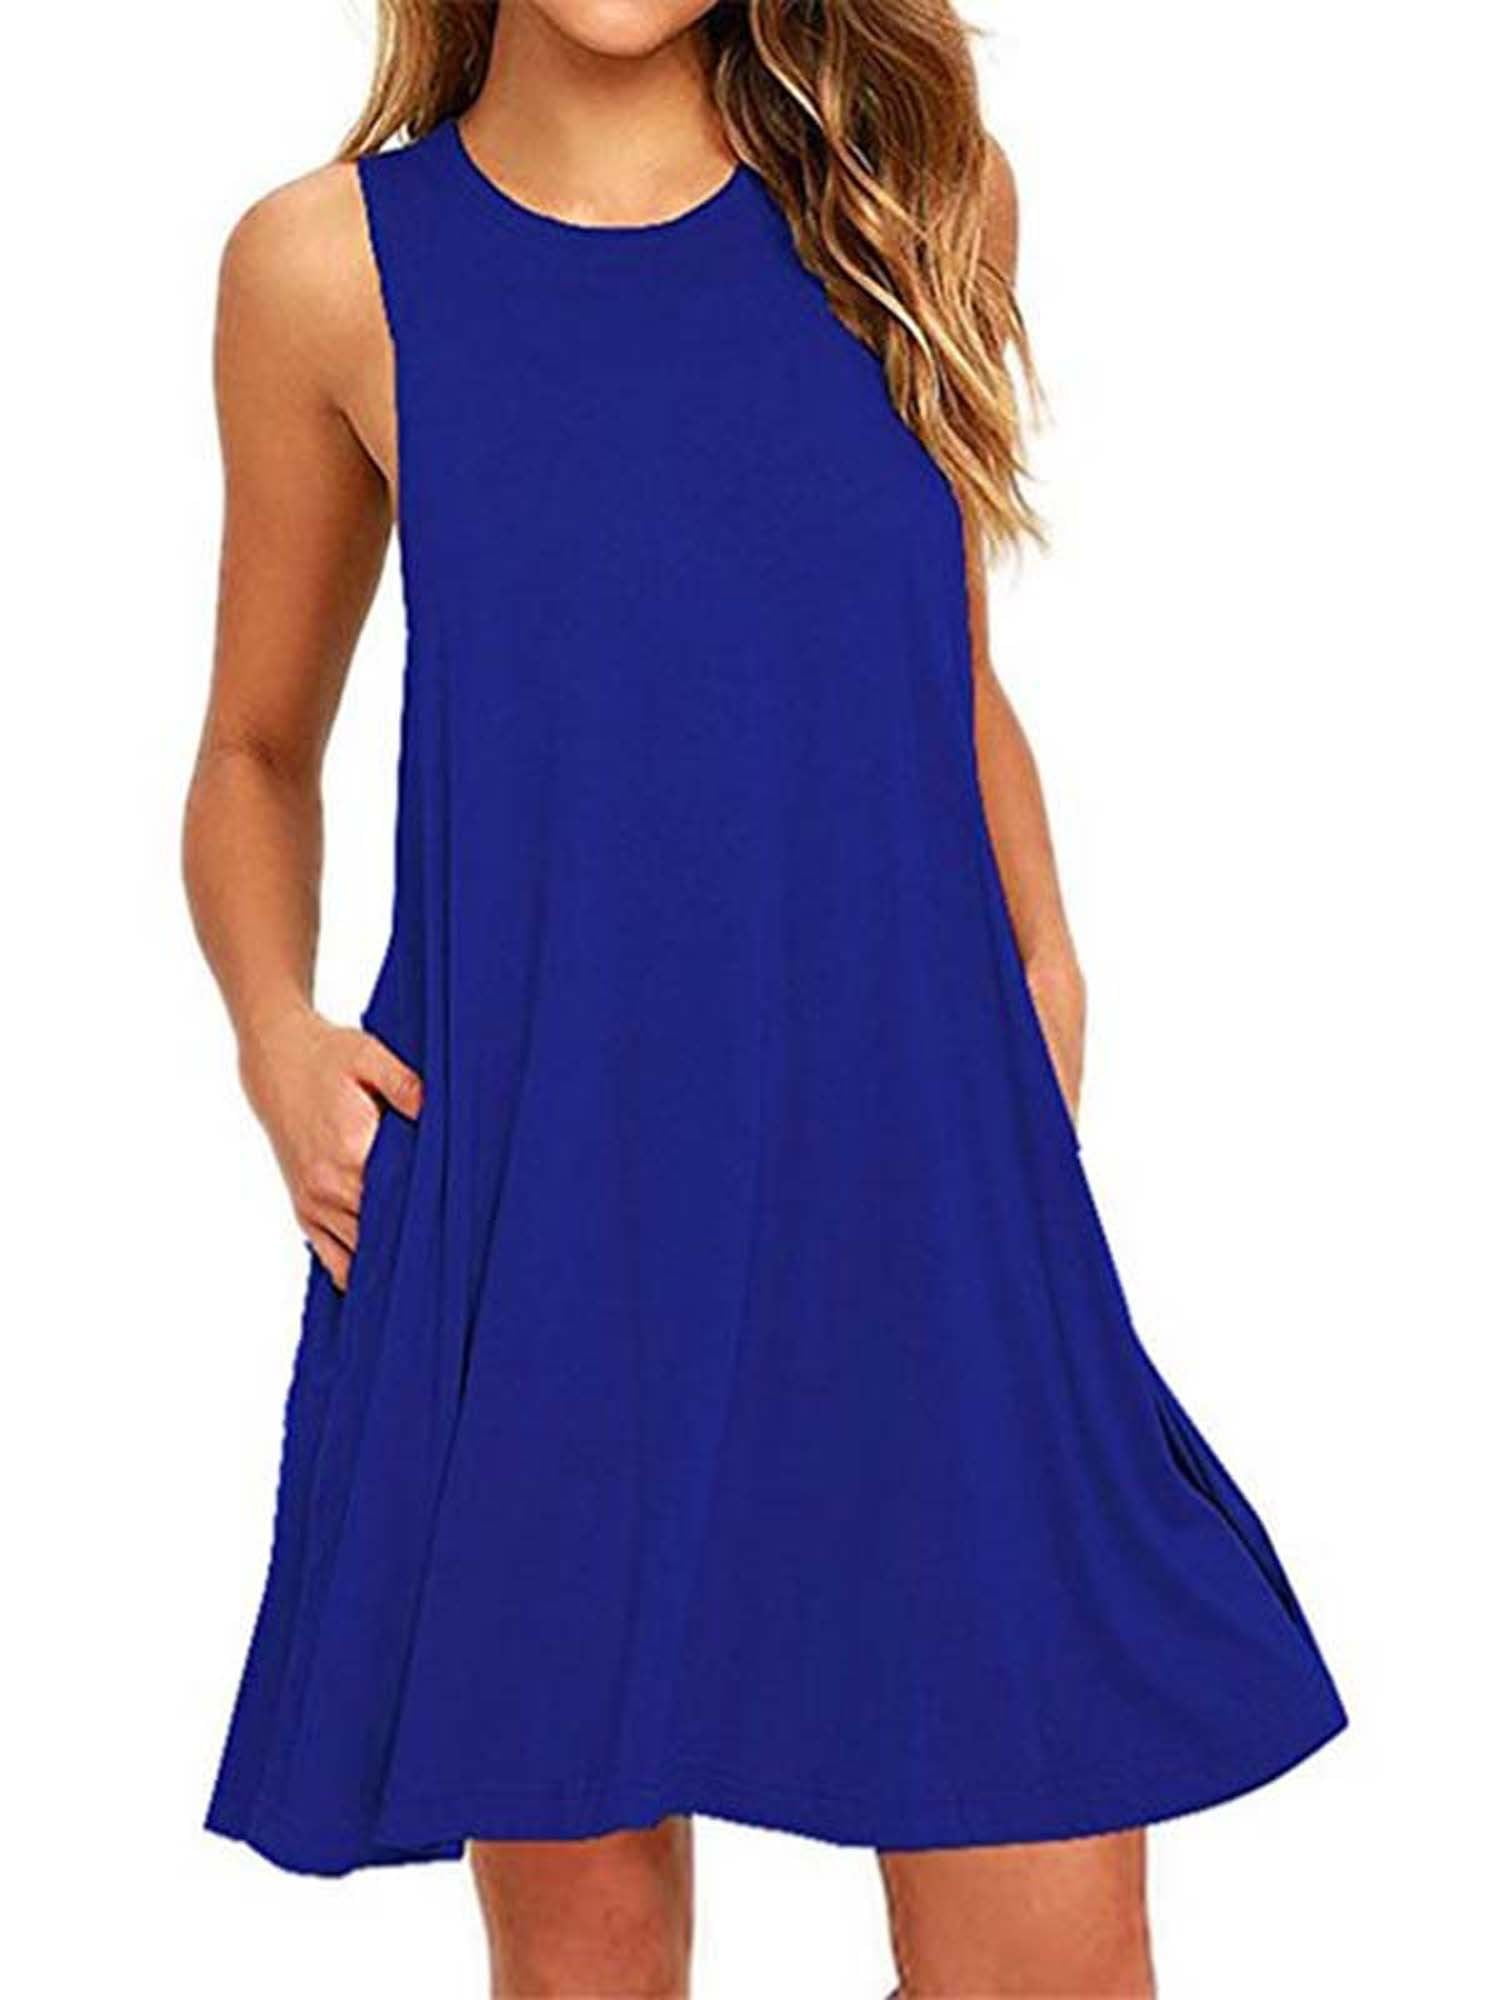 Women Ladies Plain Cami Swing Dress Mini Sleeveless Vest Top Plus Size 8-26 